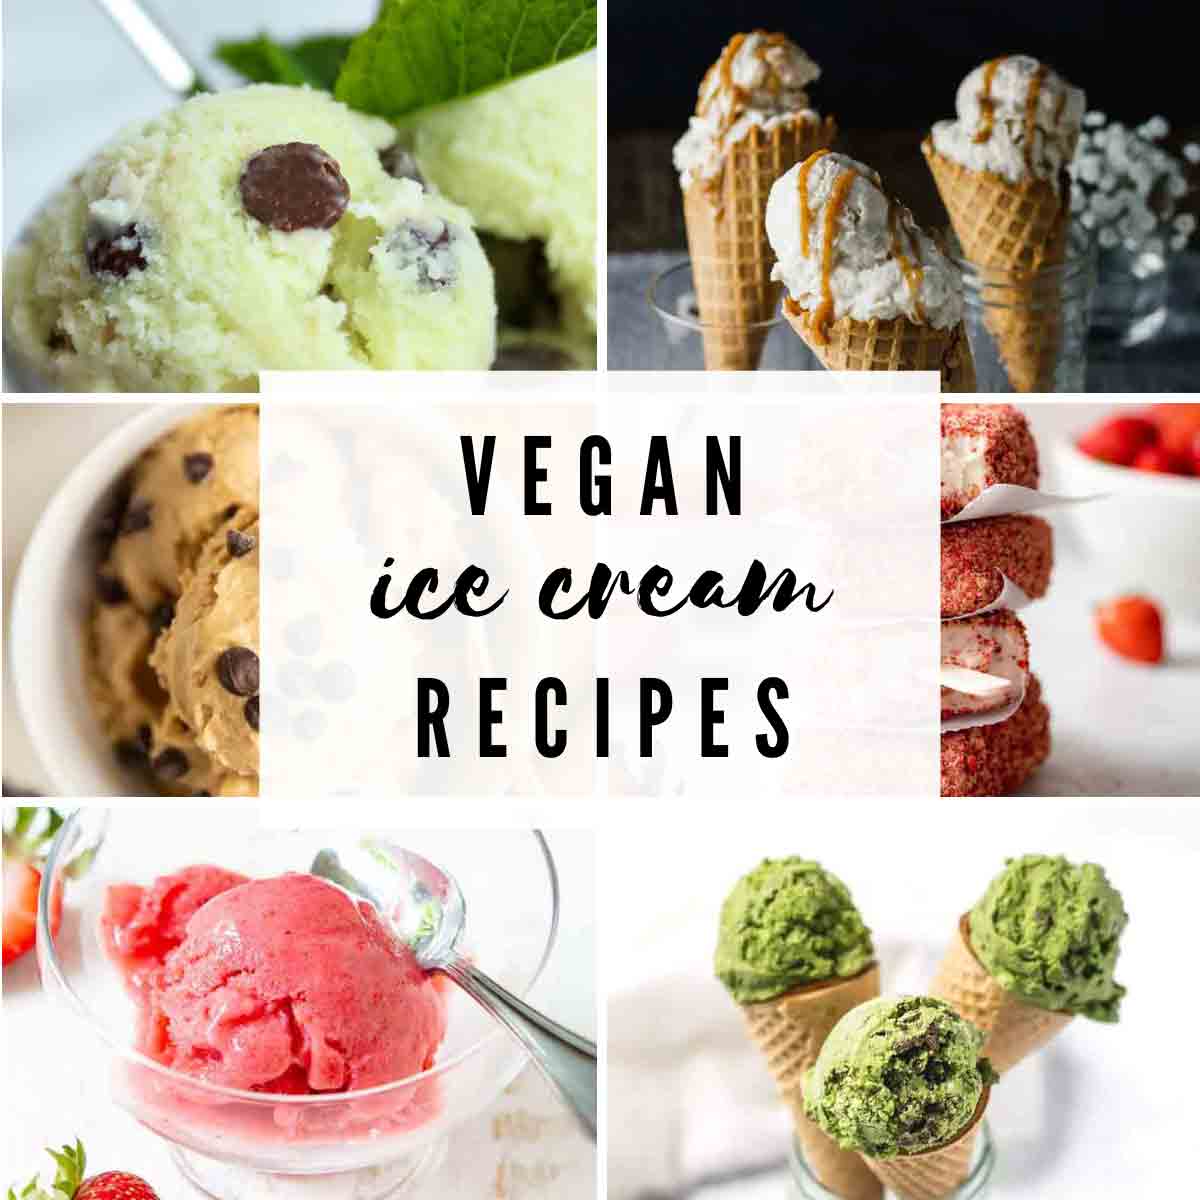 Thumbnail Image Of 6 Different Vegan Ice Cream Recipes